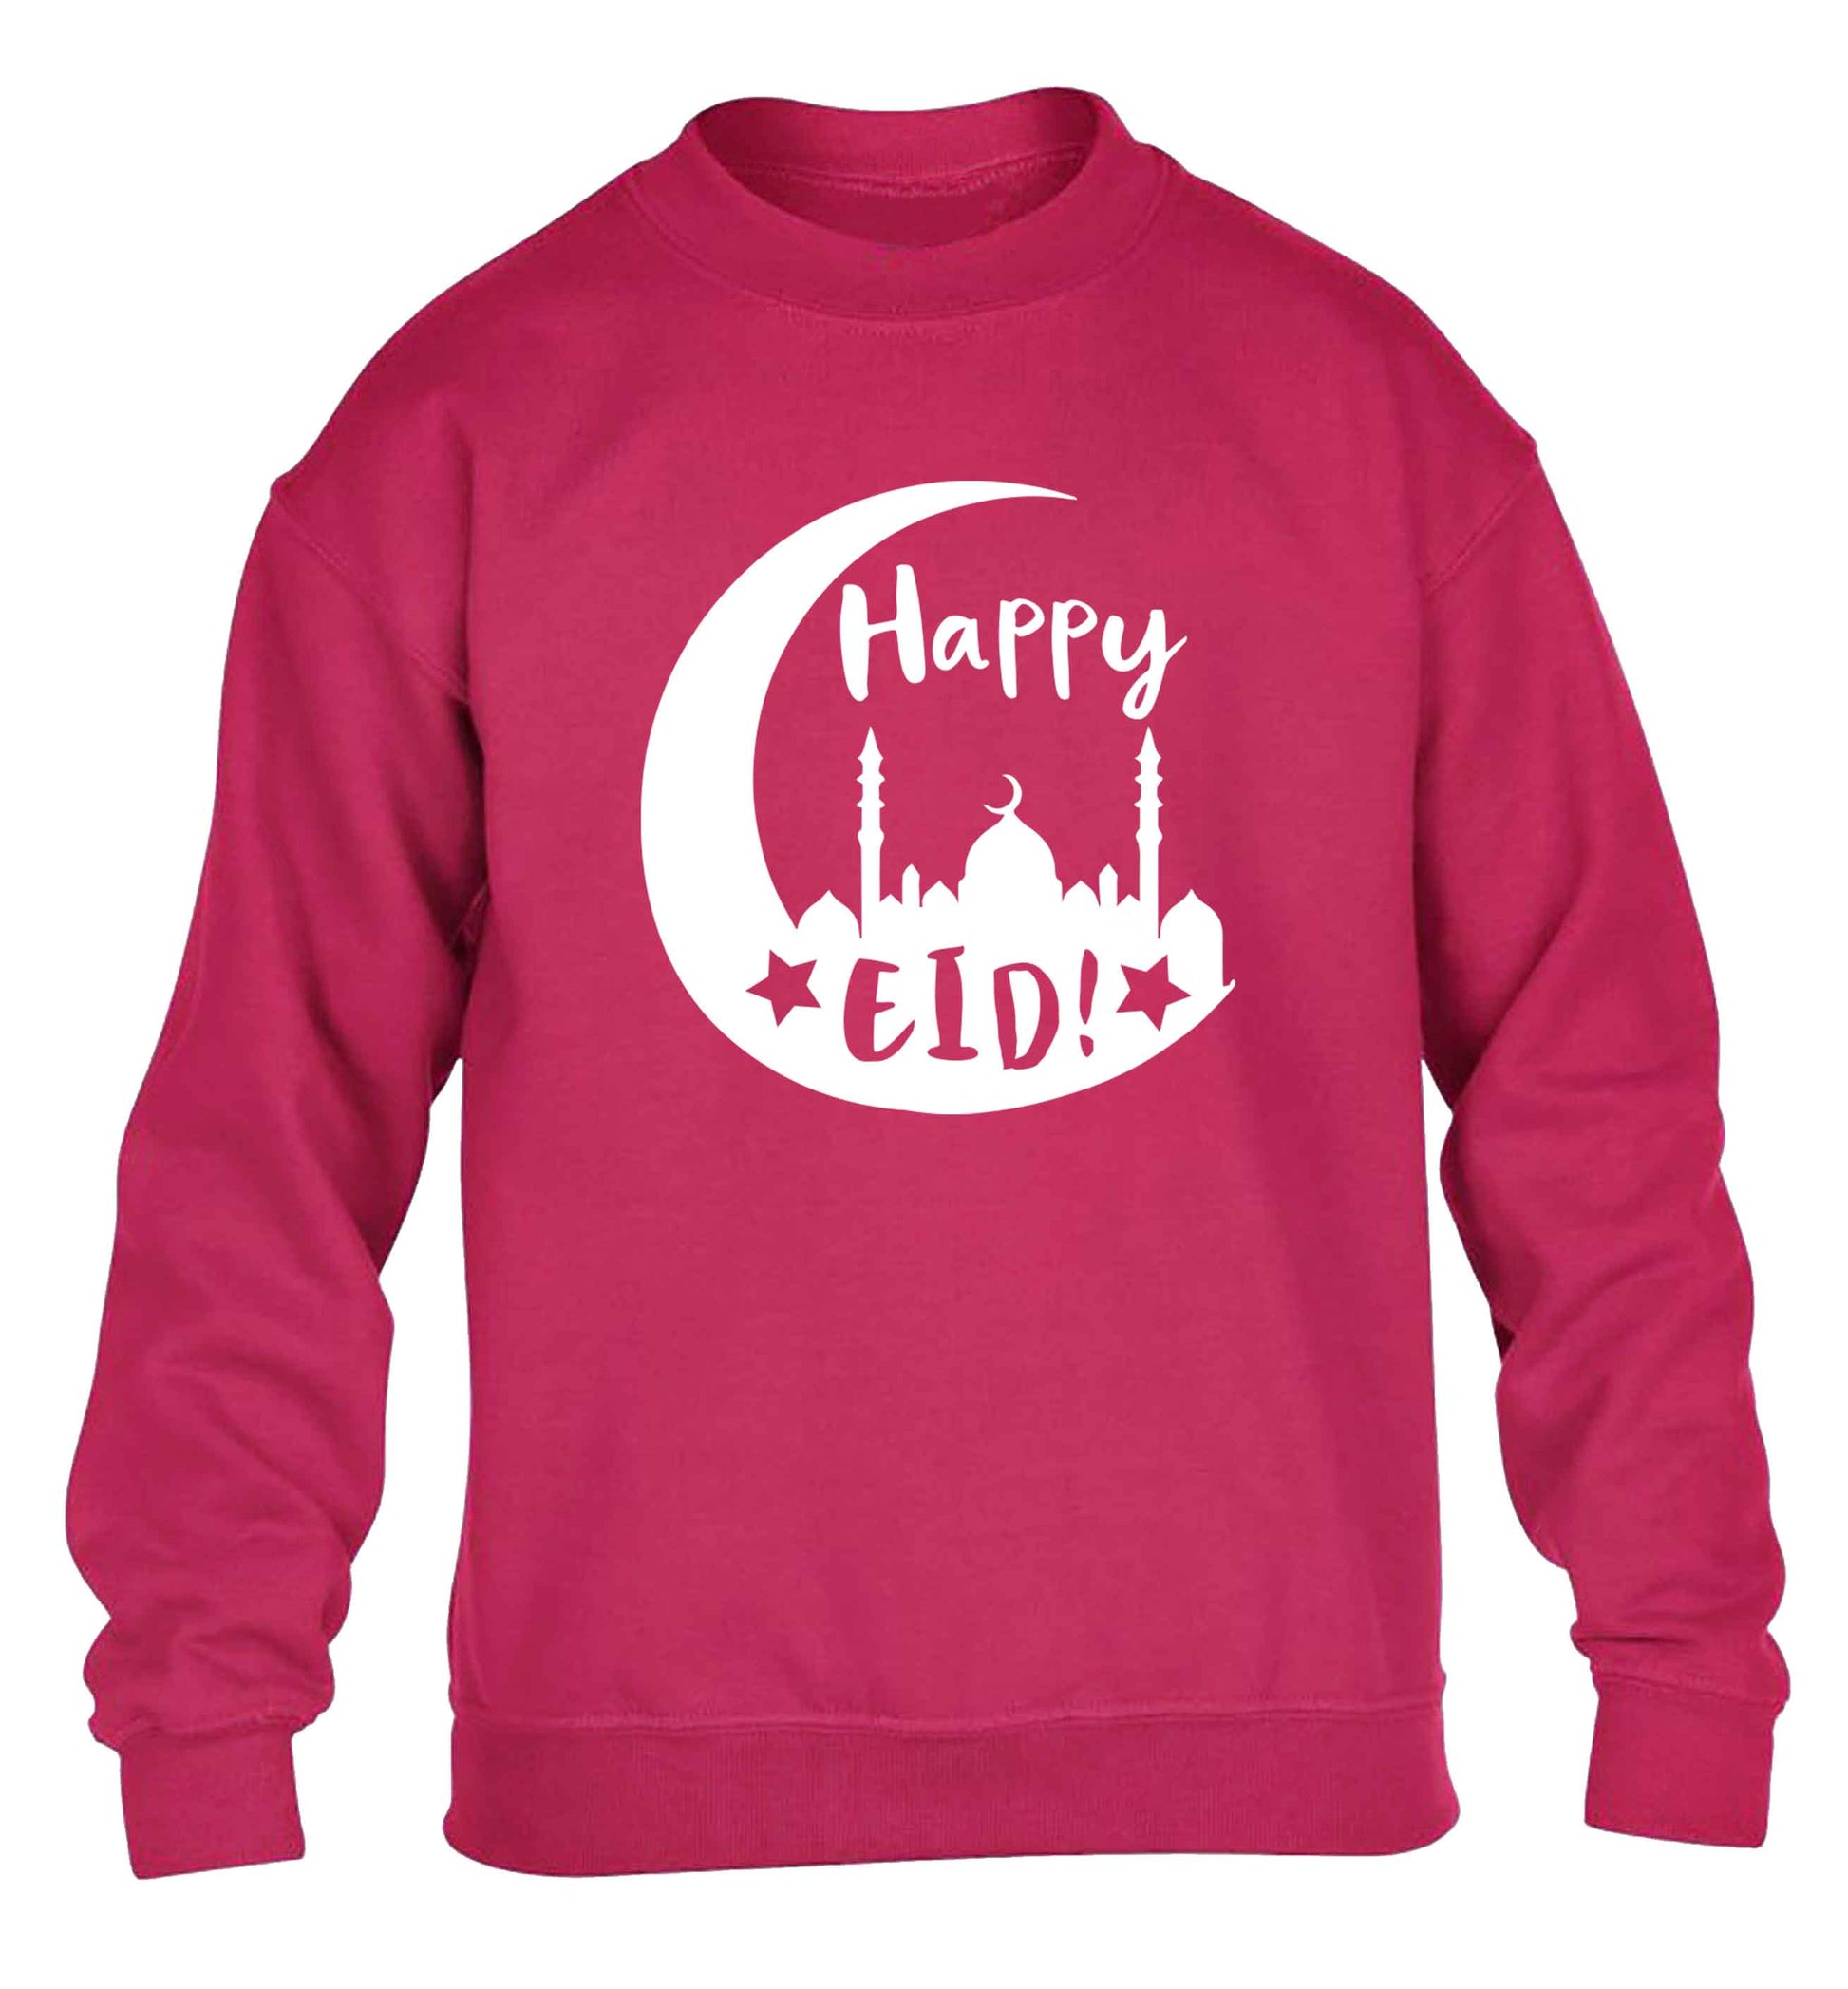 Happy Eid children's pink sweater 12-13 Years